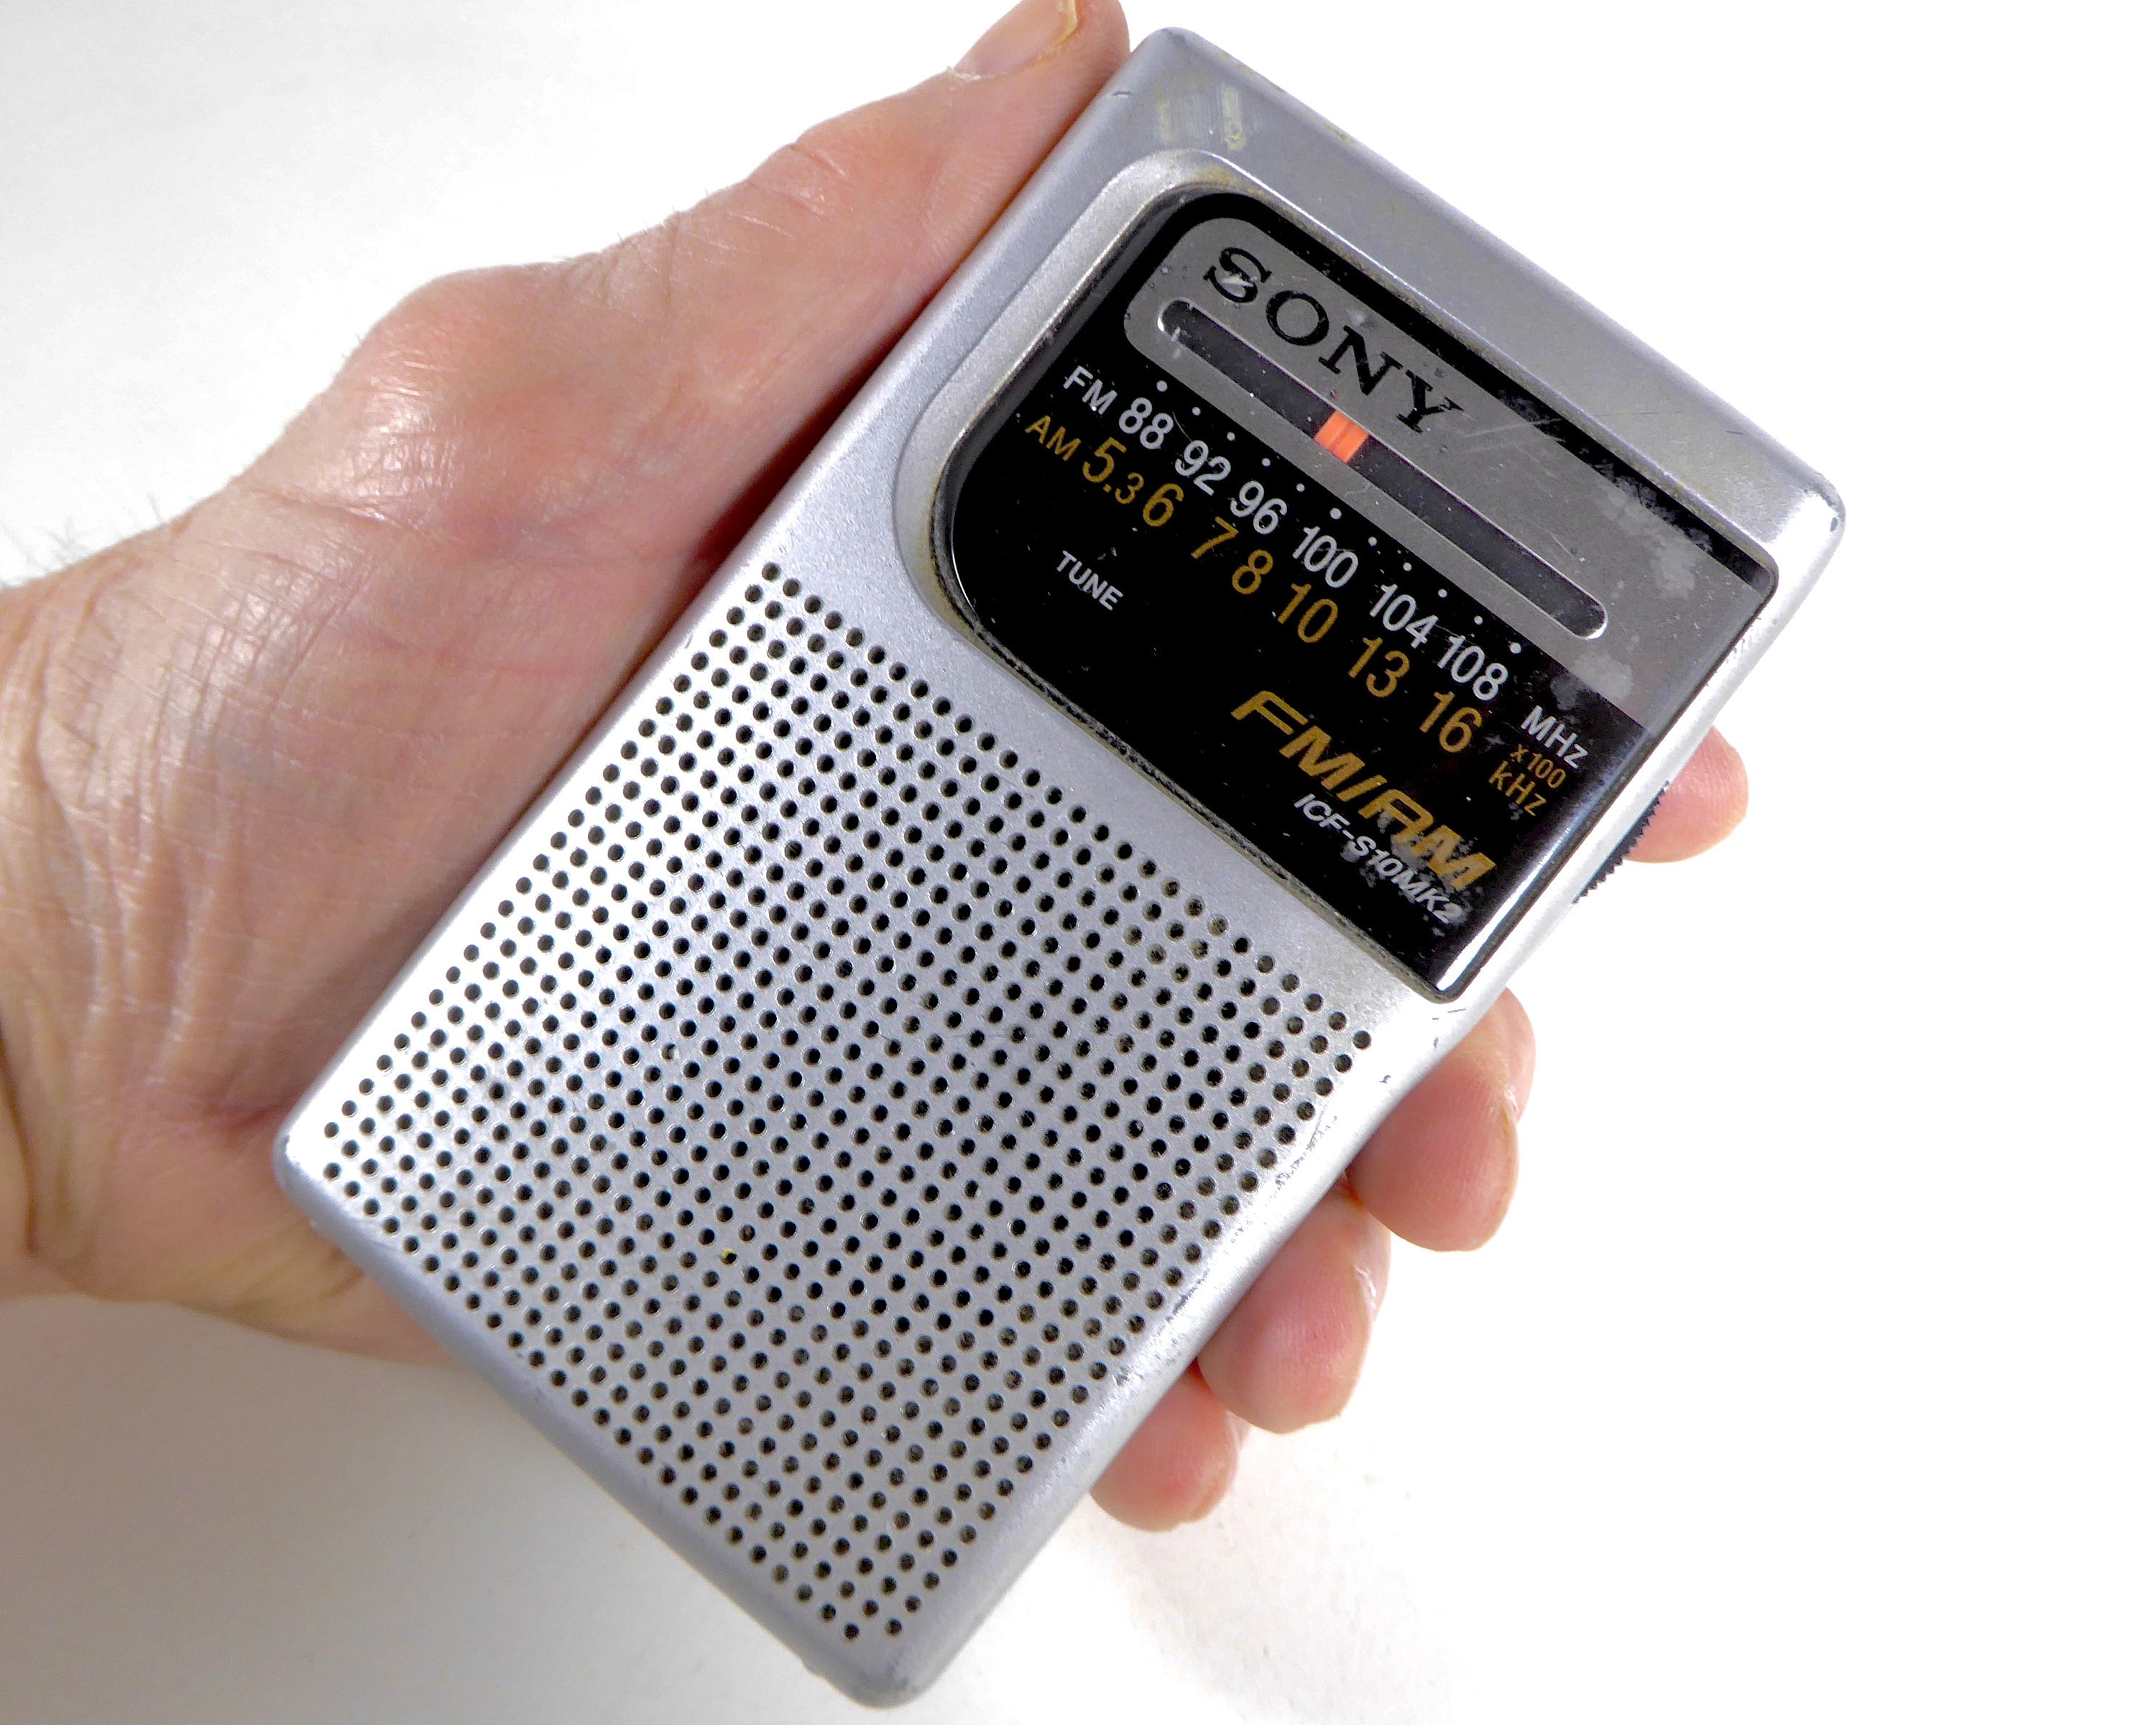 NEW** Sony ICF-S10MK2 Portable Pocket AM/FM Radio - FREE S&H